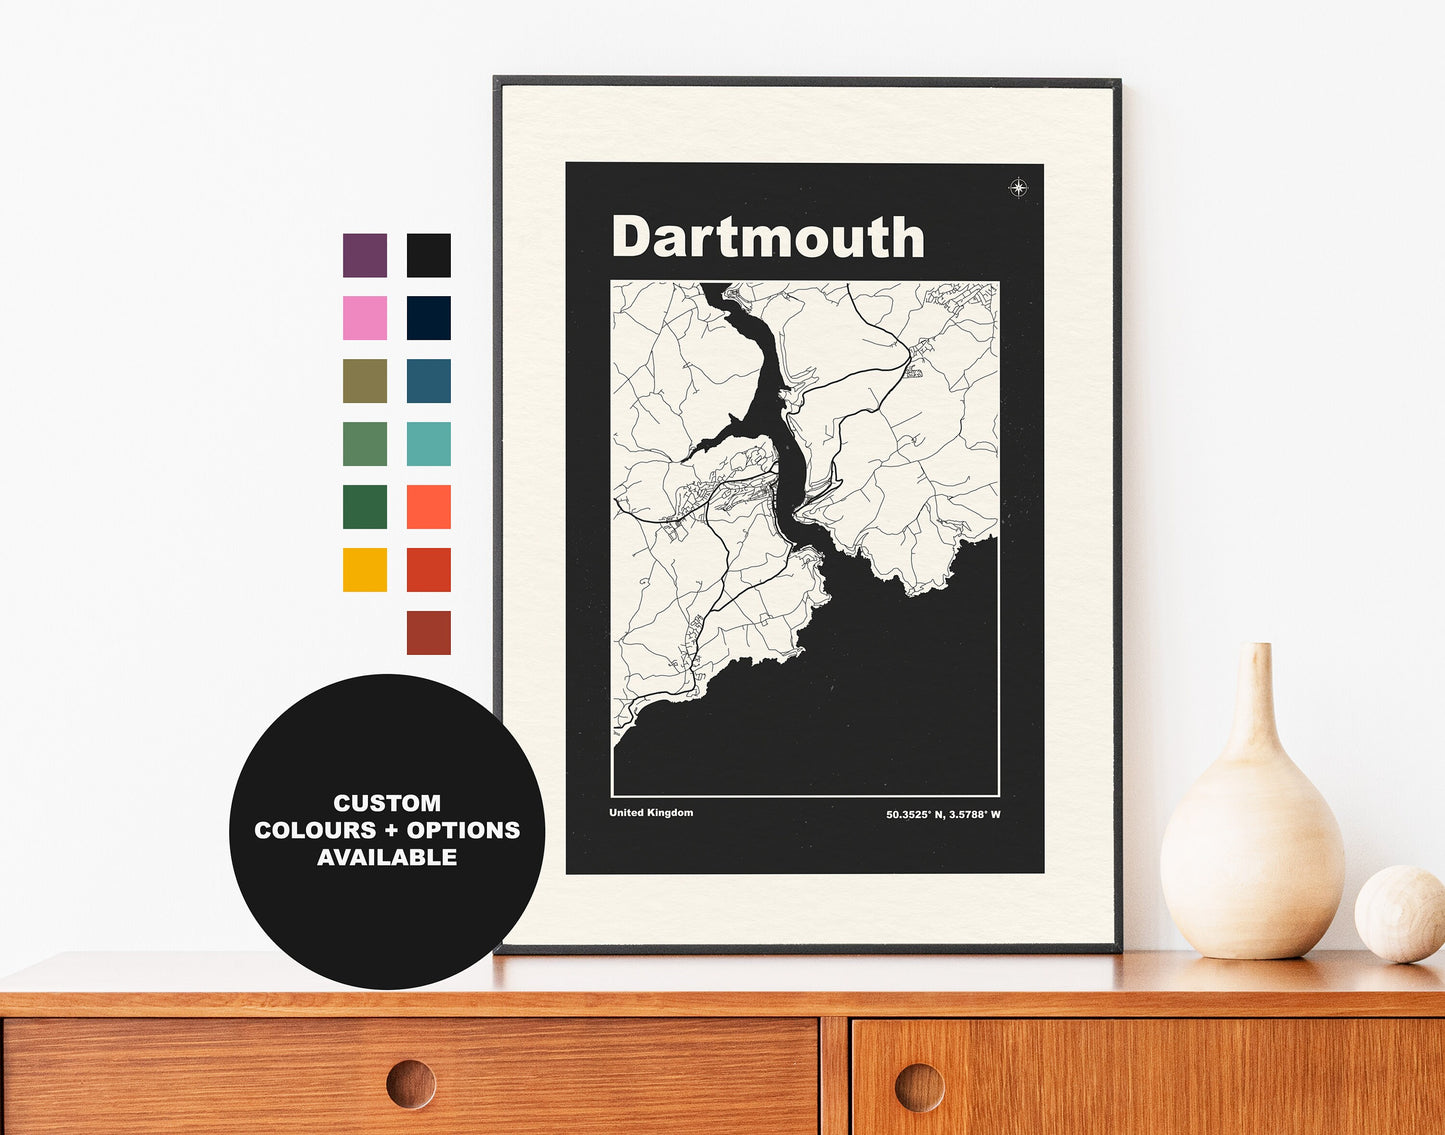 Dartmouth Print - Map Print - Mid Century Modern  - Retro - Vintage - Contemporary - Dartmouth Print - Map - Map Poster - Gift - Cornwall